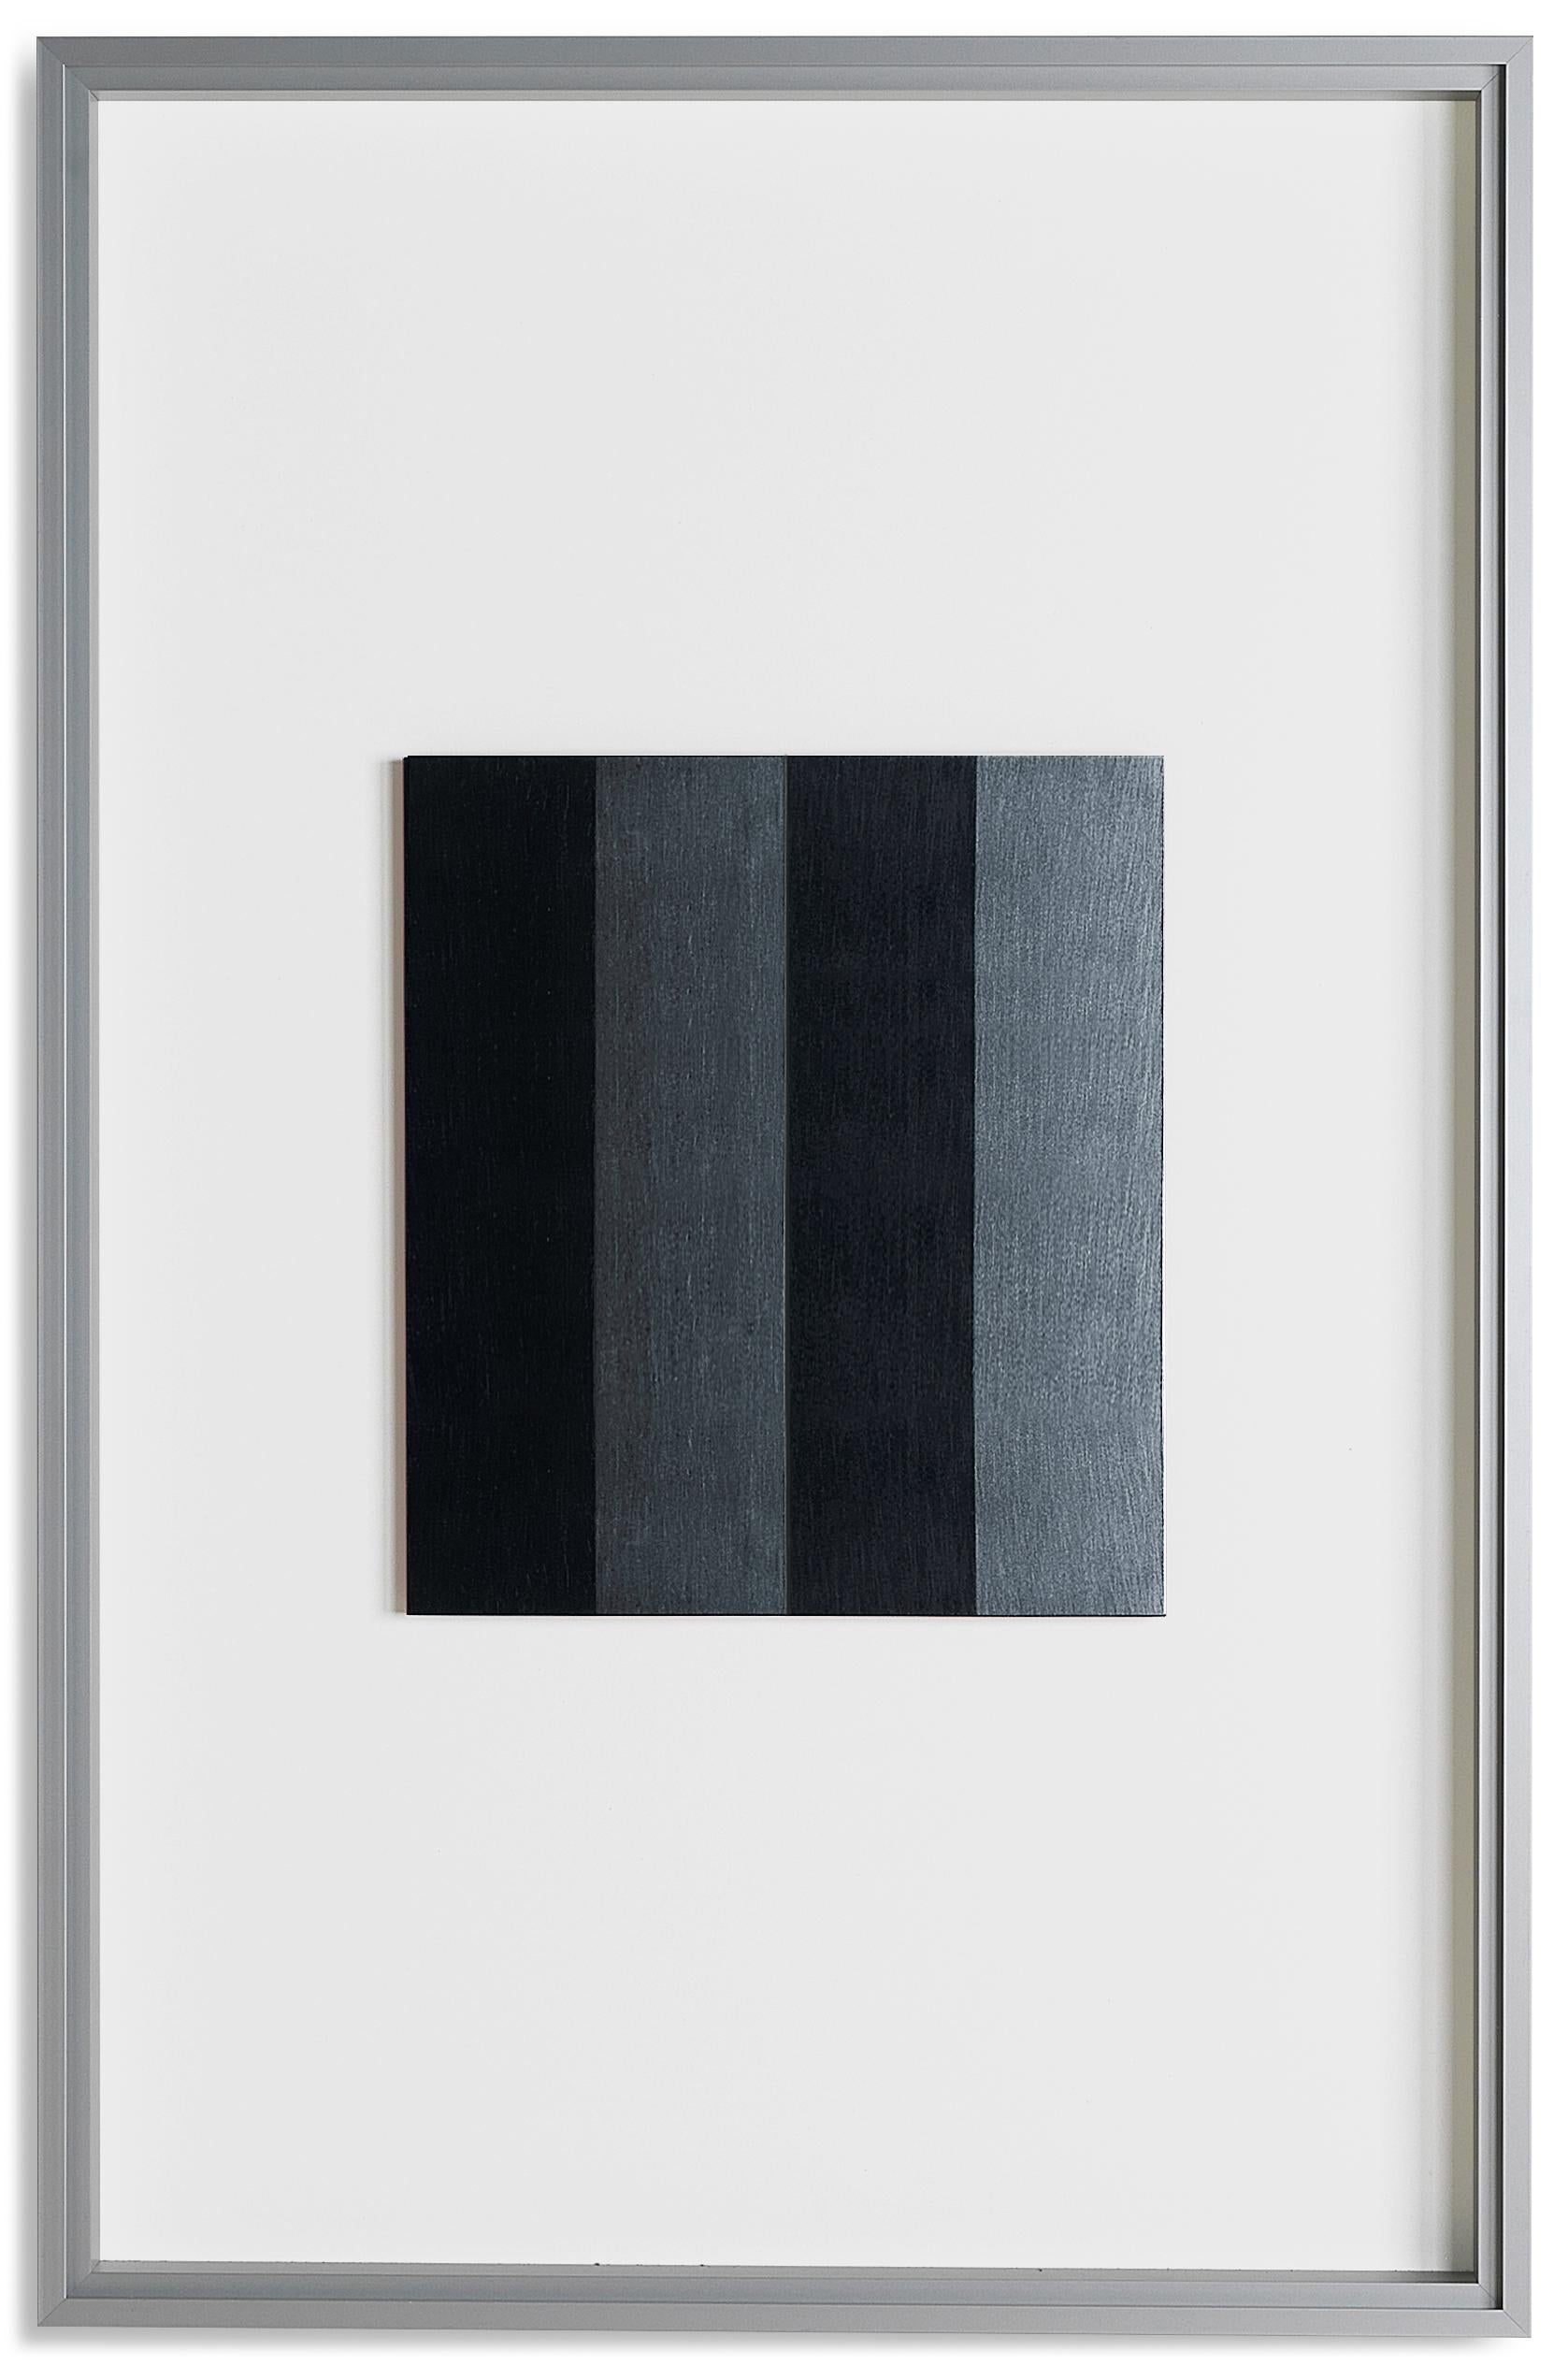 Keiji Takeuchi Abstract Sculpture - Phenomena, Black 02. Limited Edition 1st of 20 pieces.